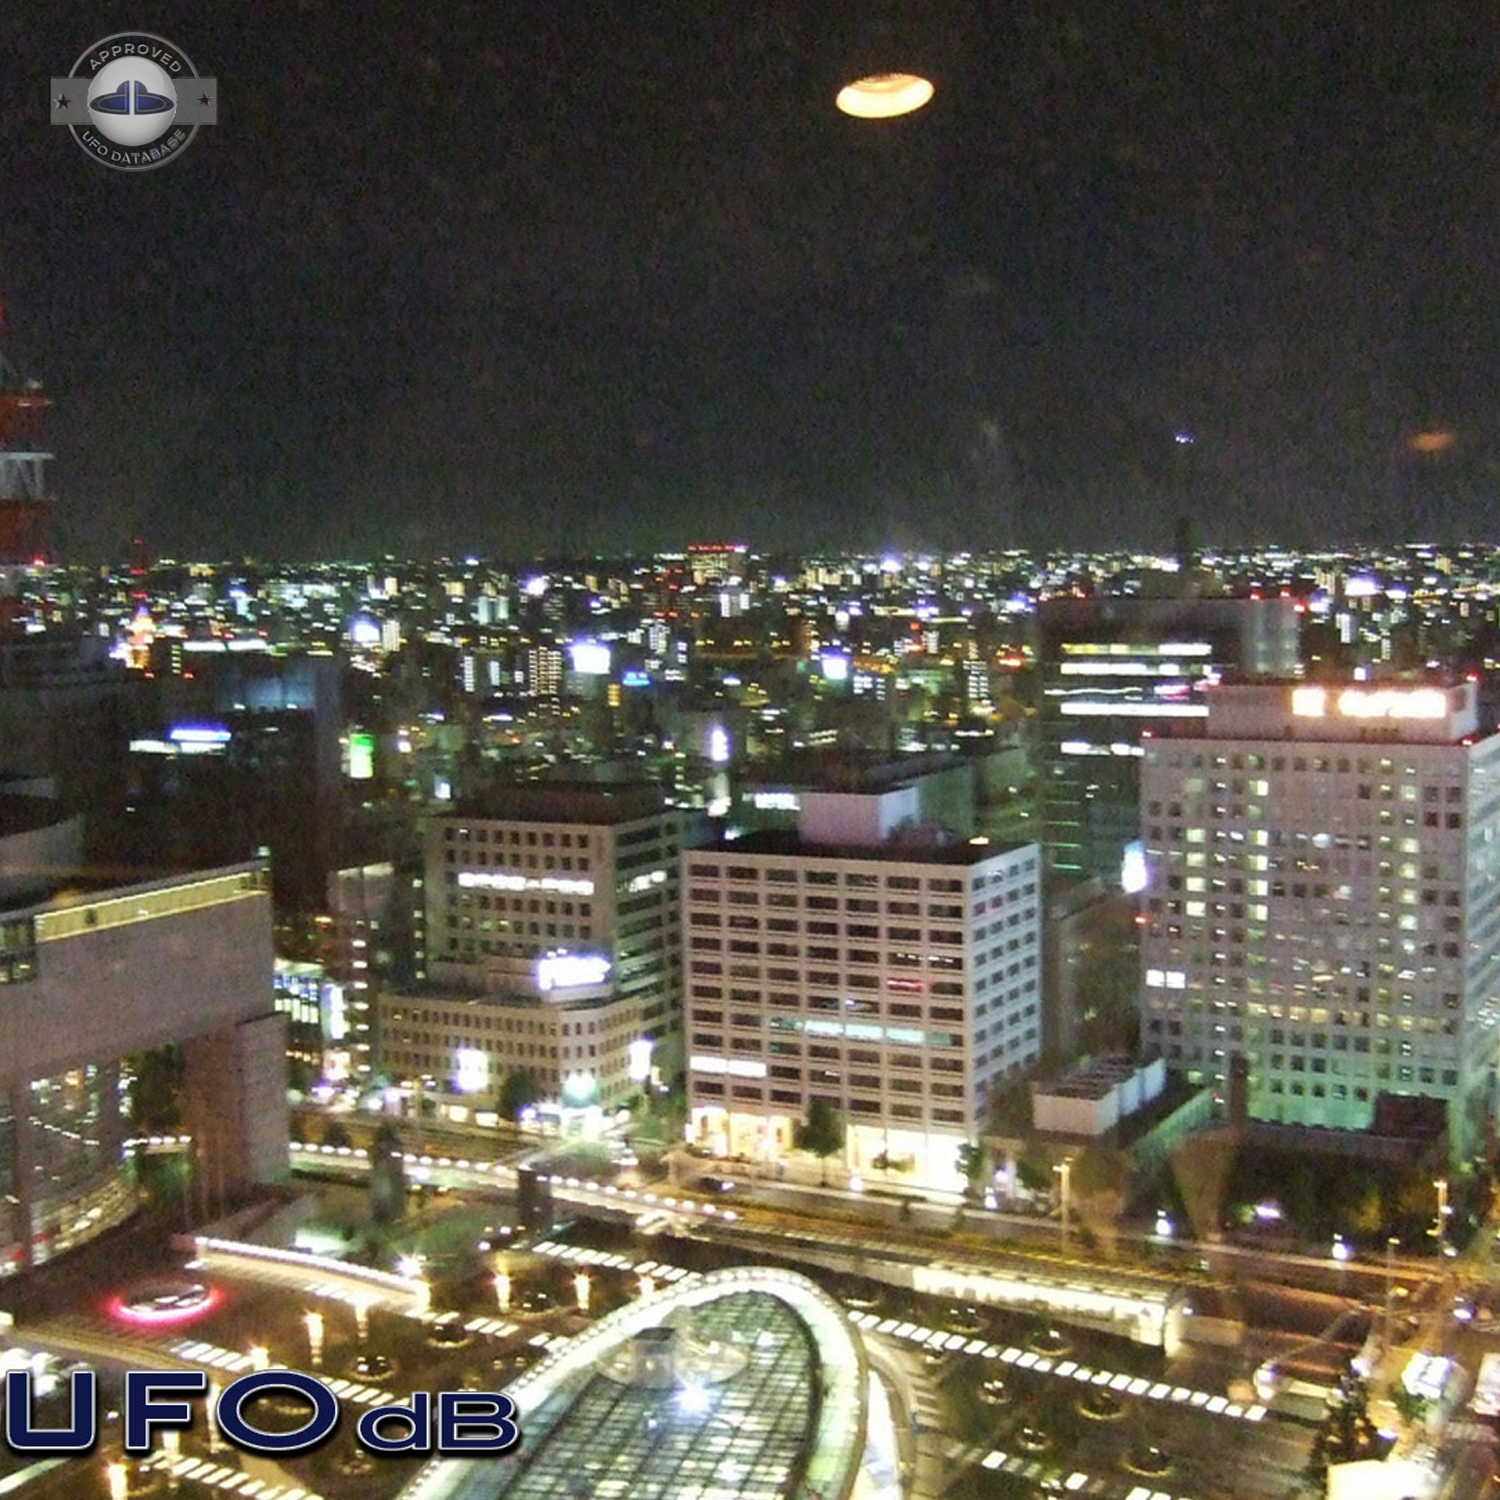 Light Orange glowing UFO saucer over Nagoya, Chubu | Japan 2007 UFO Picture #201-2